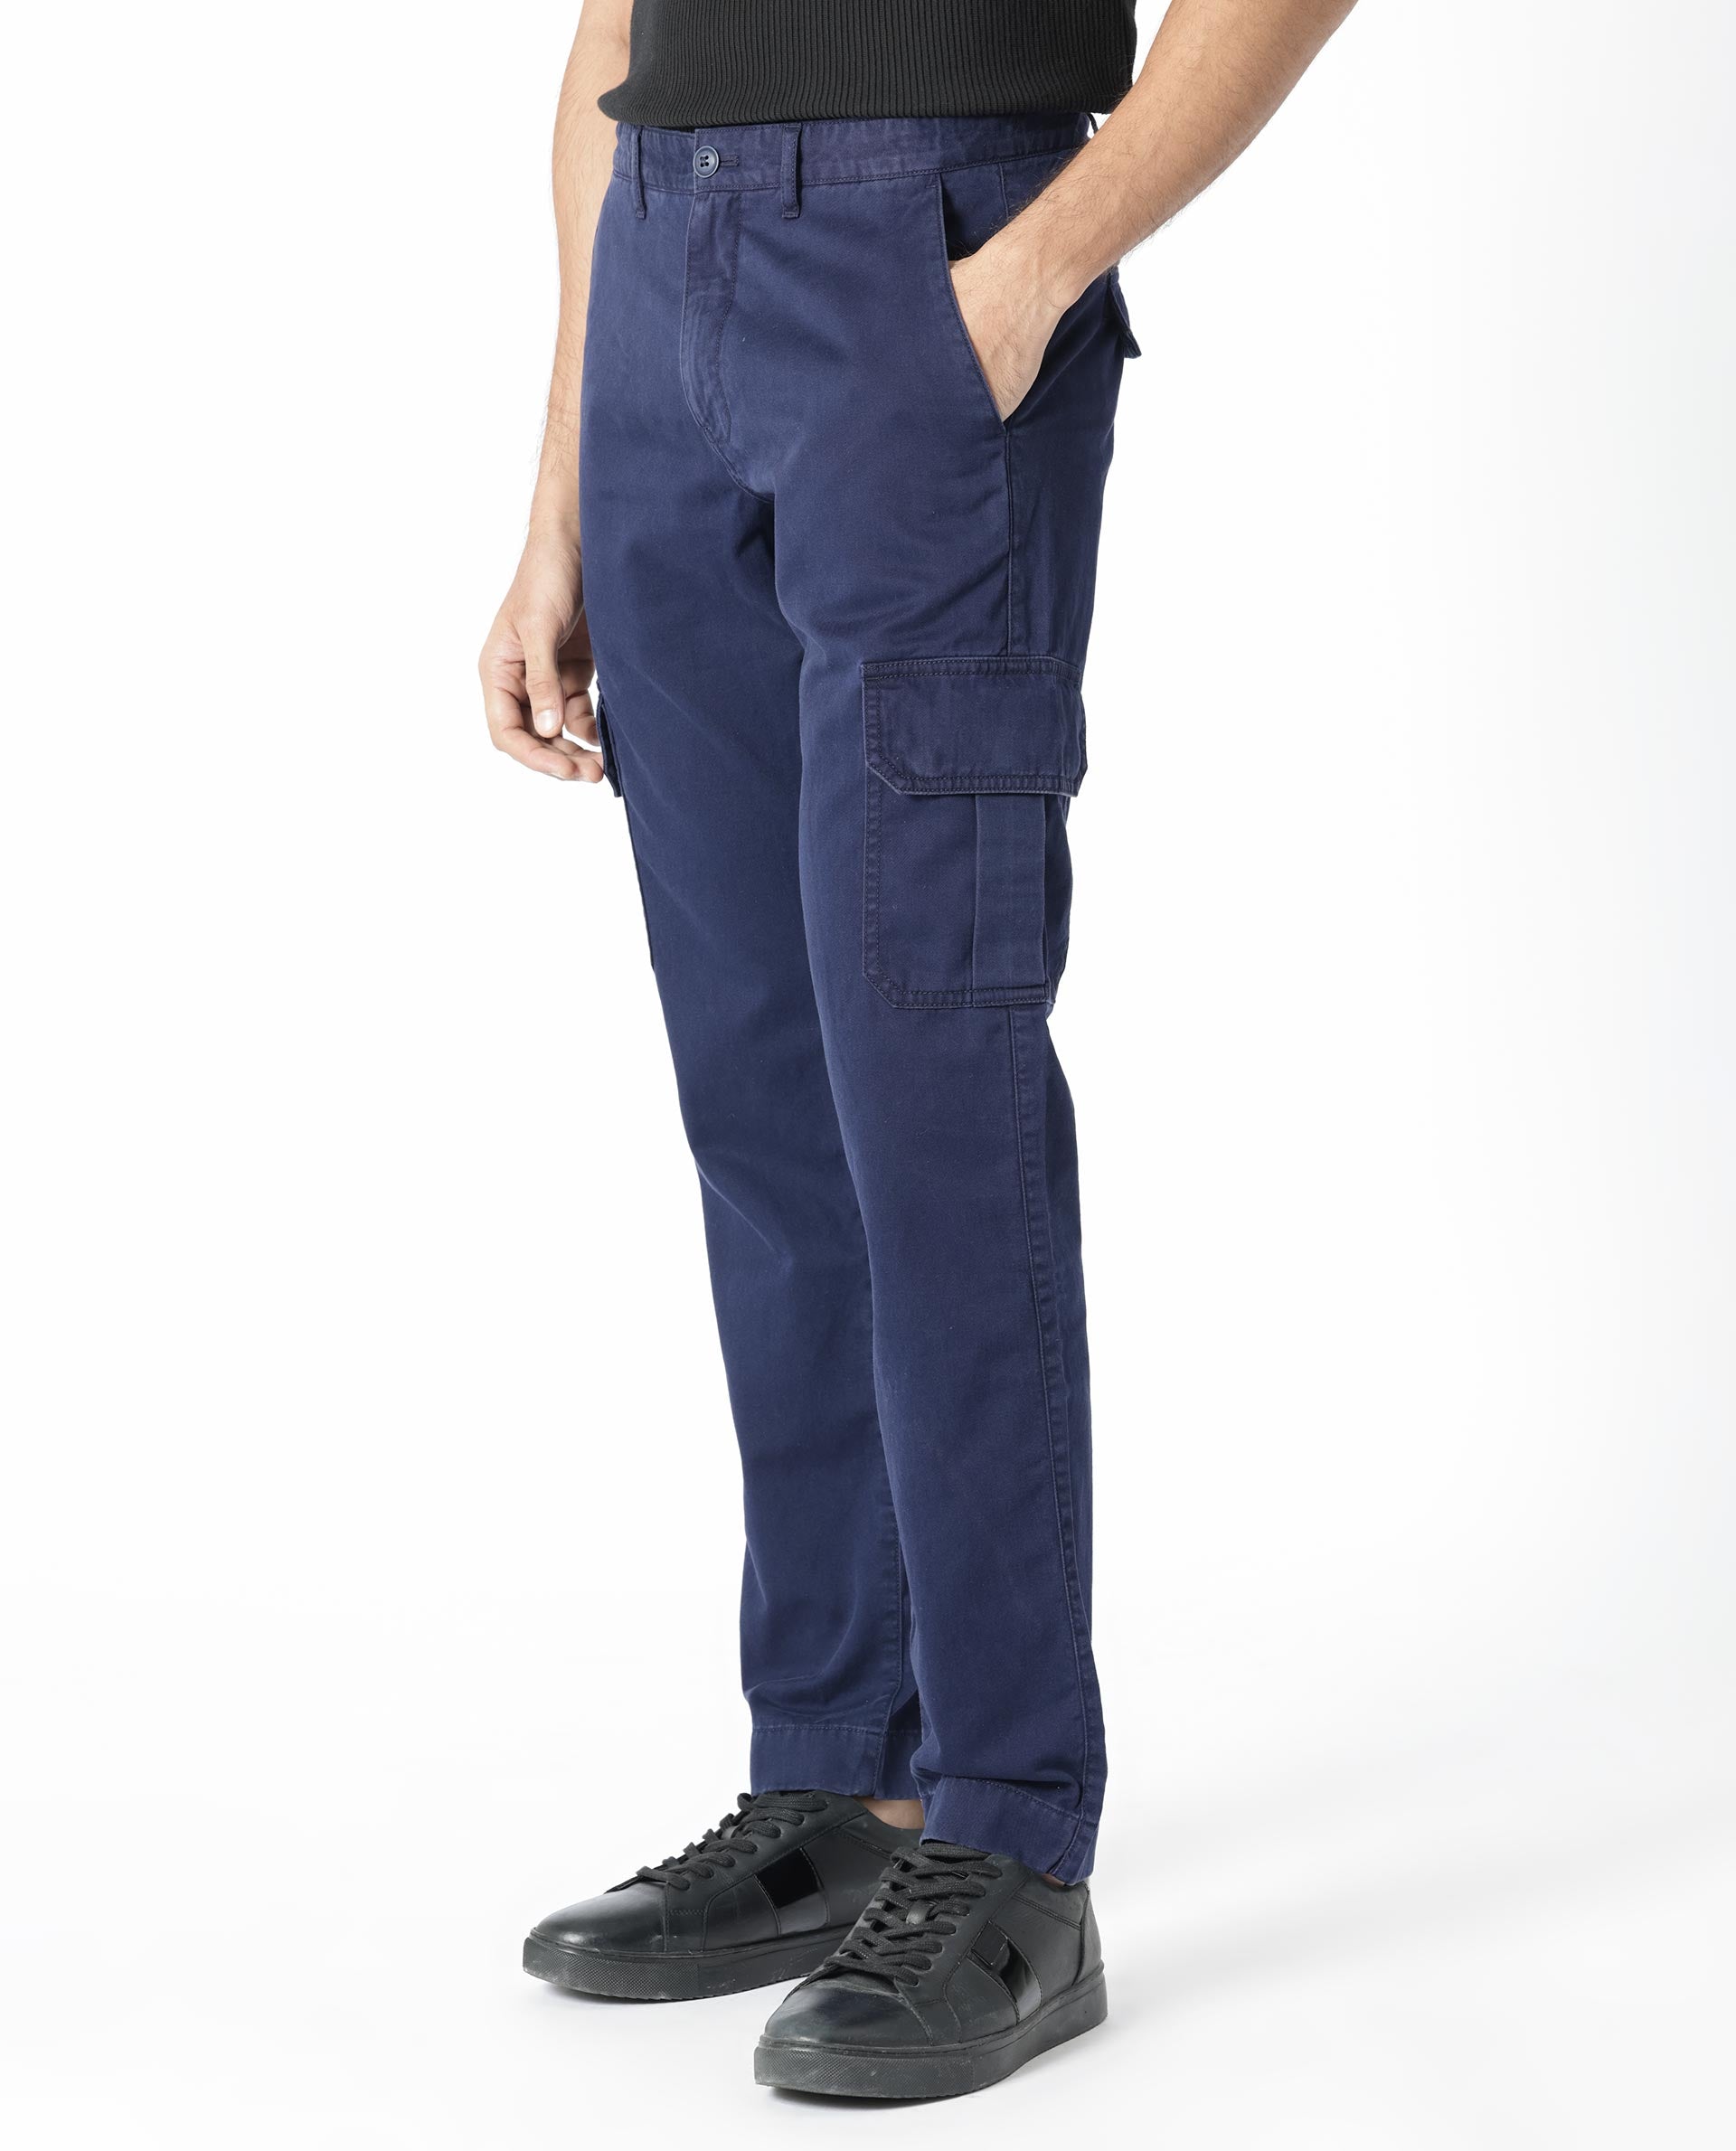 Buy Khaki Trousers & Pants for Men by iVOC Online | Ajio.com